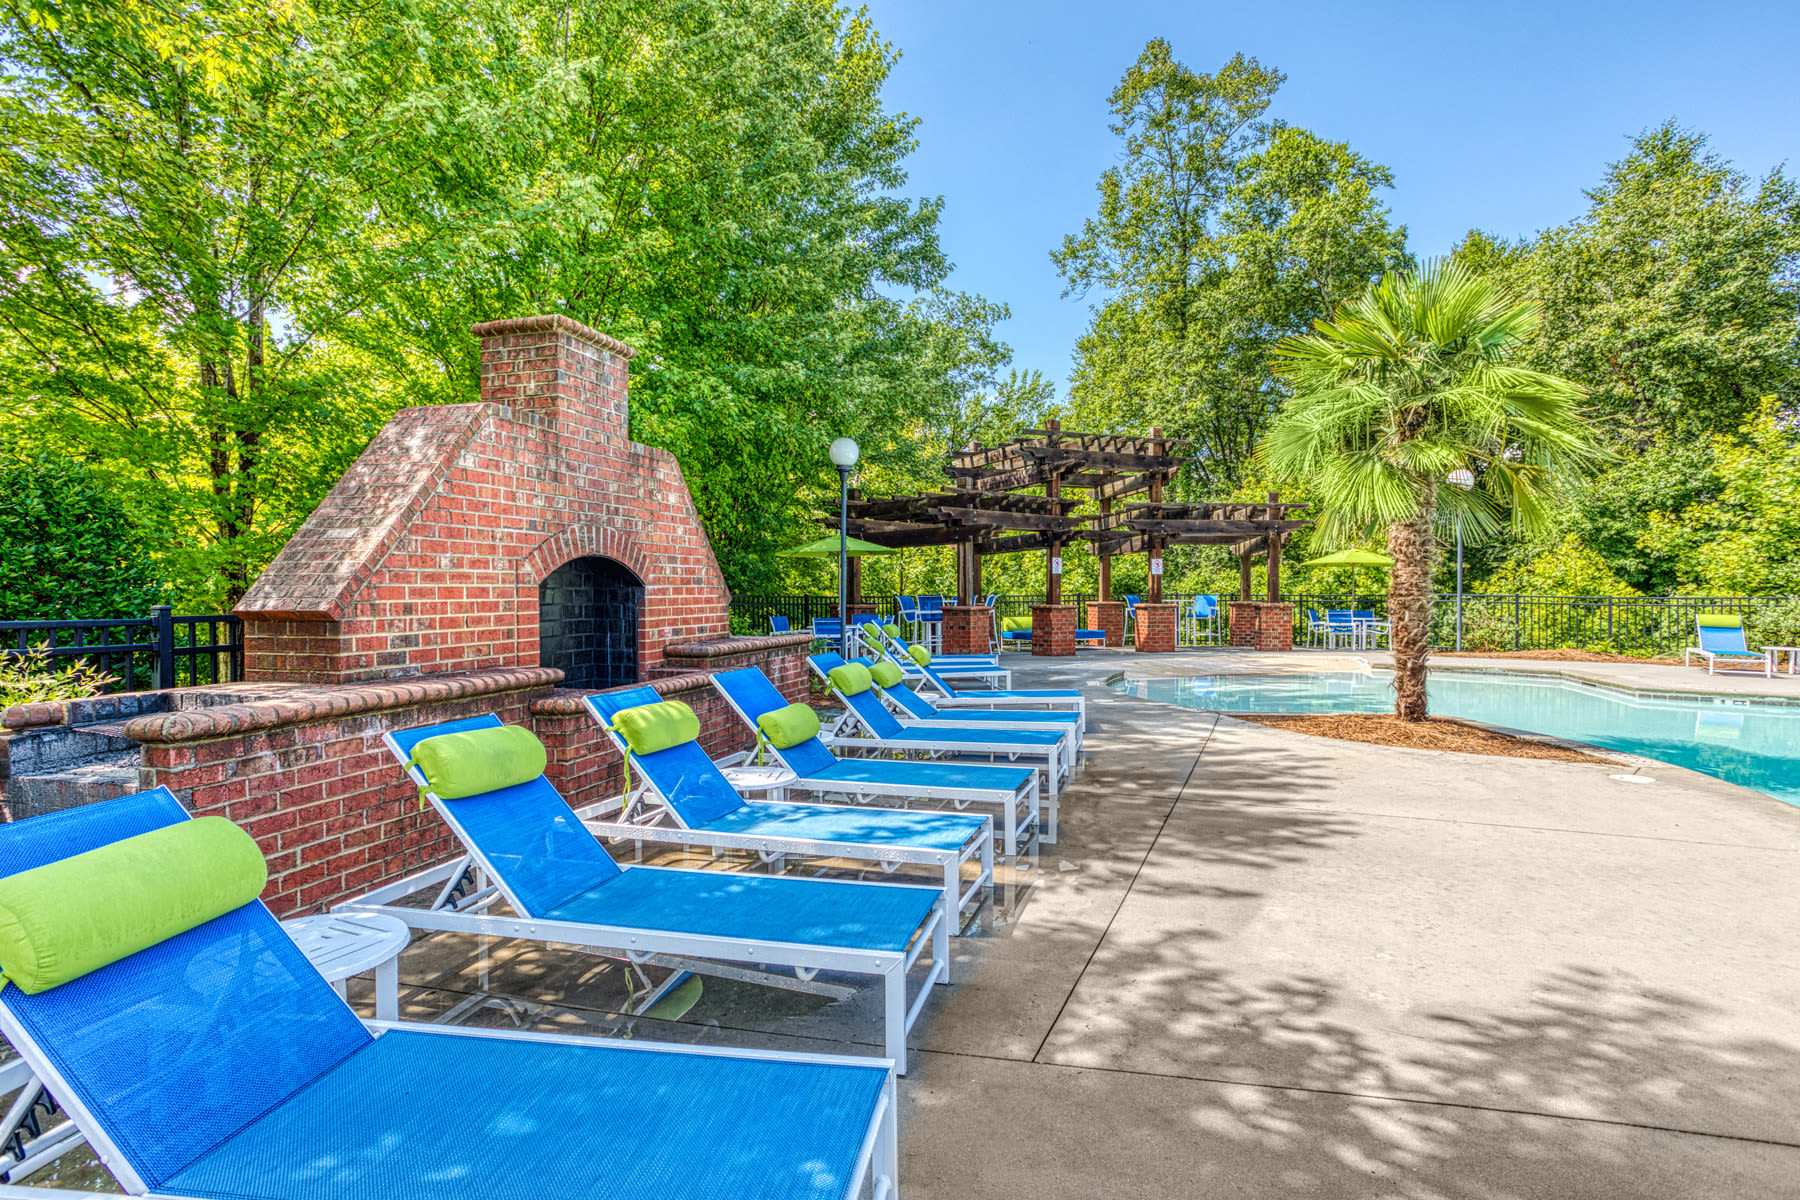 Pool lounge area at Alaris Village in Winston Salem, North Carolina